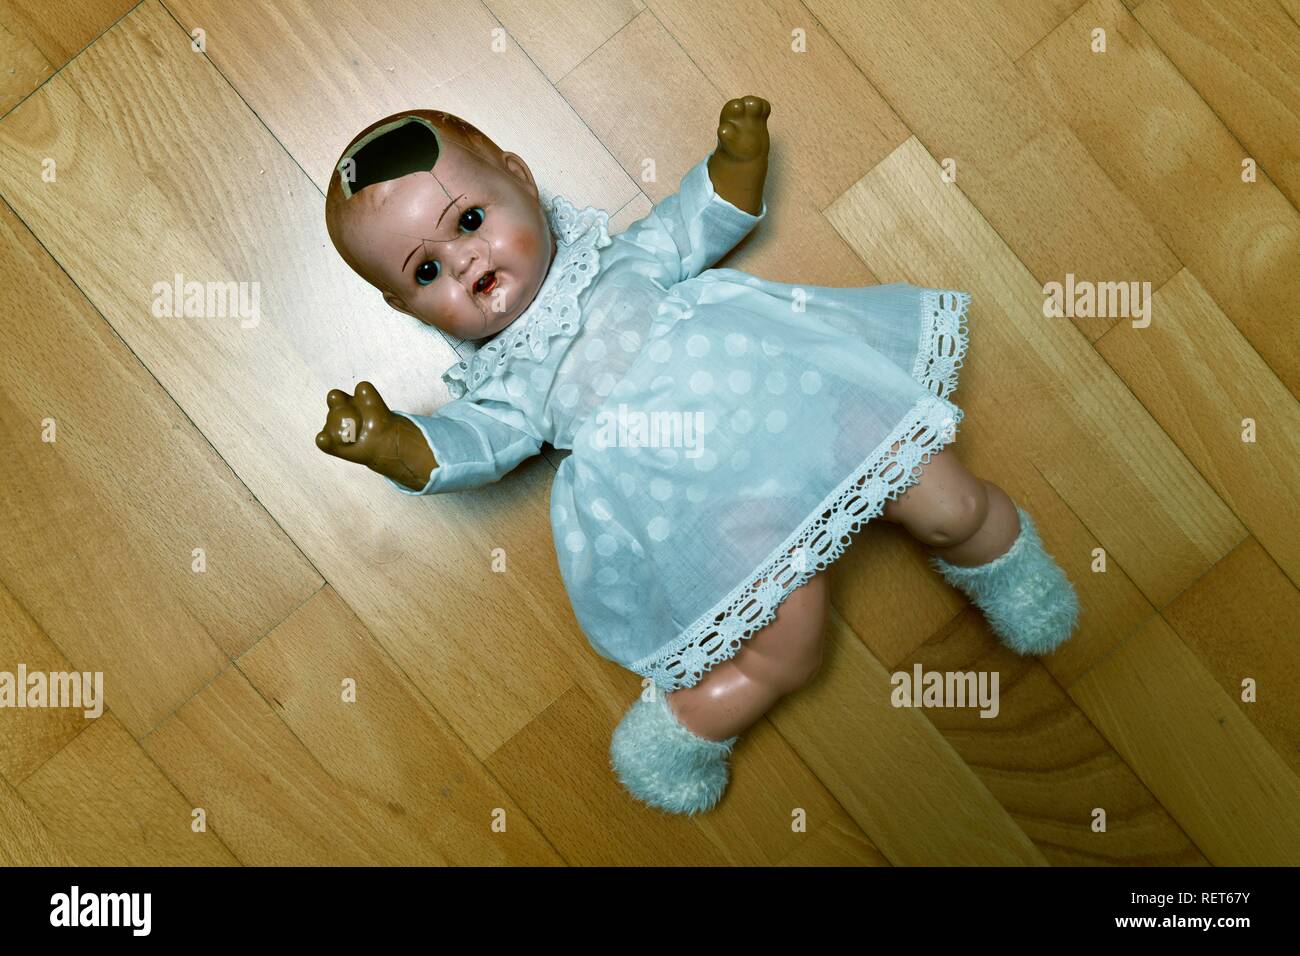 Symbol image child abuse, doll, damaged, lying on the ground, Baden-Württemberg, Germany Stock Photo